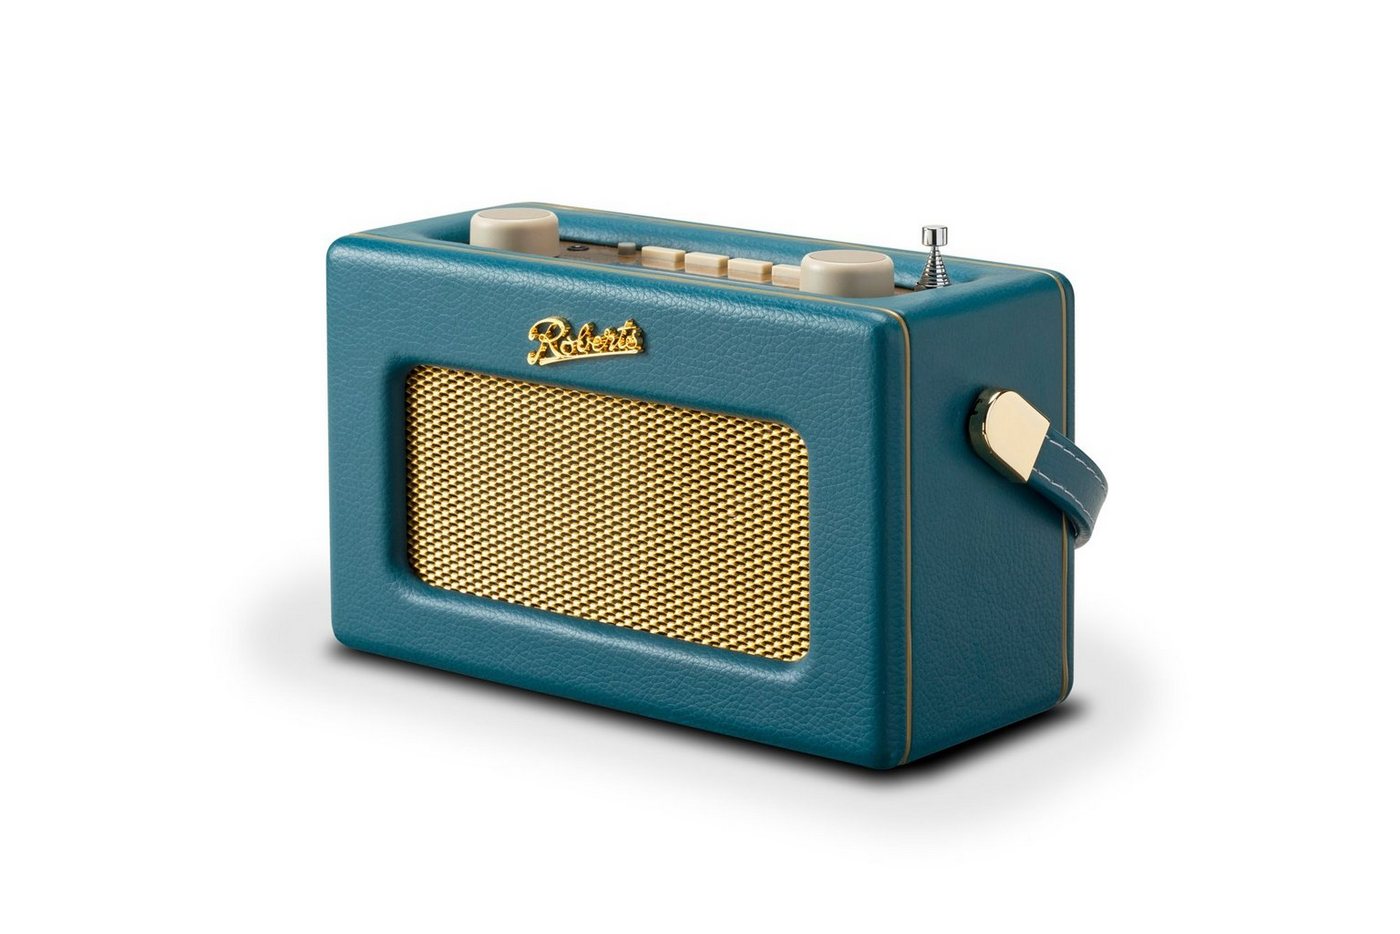 ROBERTS Revival Uno BT, teal blue, tragbares DAB+/FM Rad Digitalradio (DAB) von ROBERTS